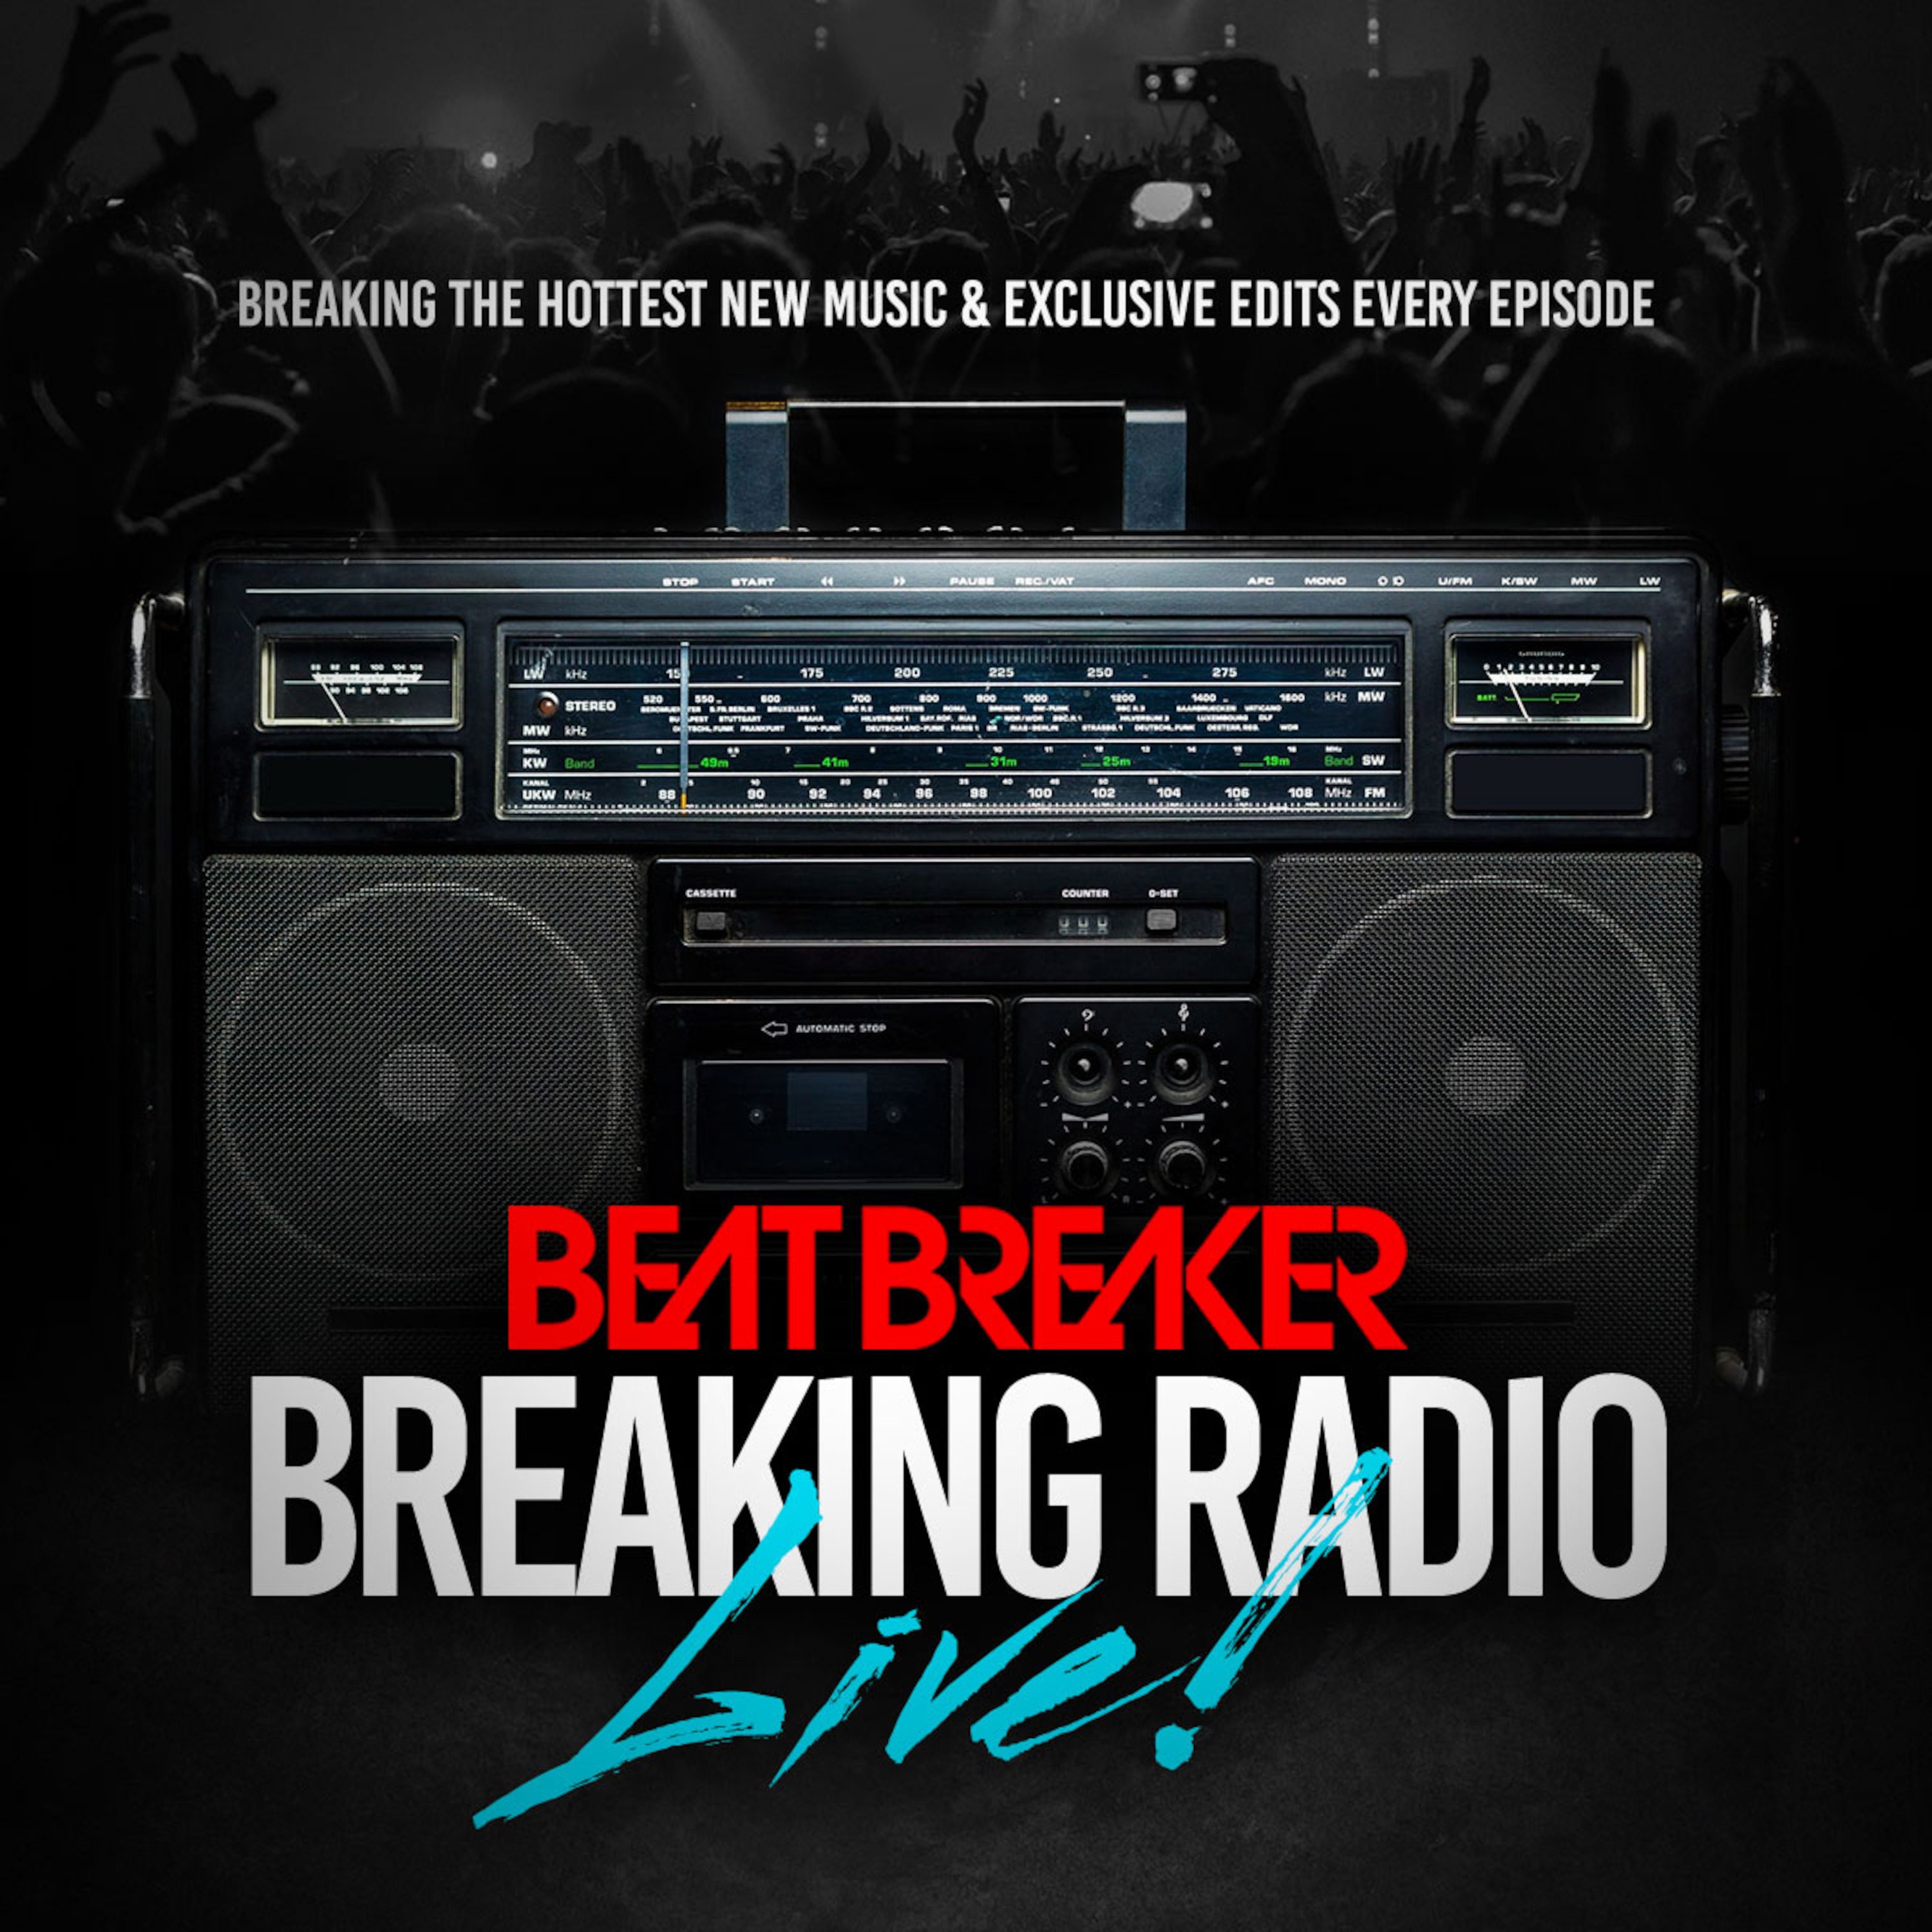 BREAKING RADIO LIVE with BeatBreaker